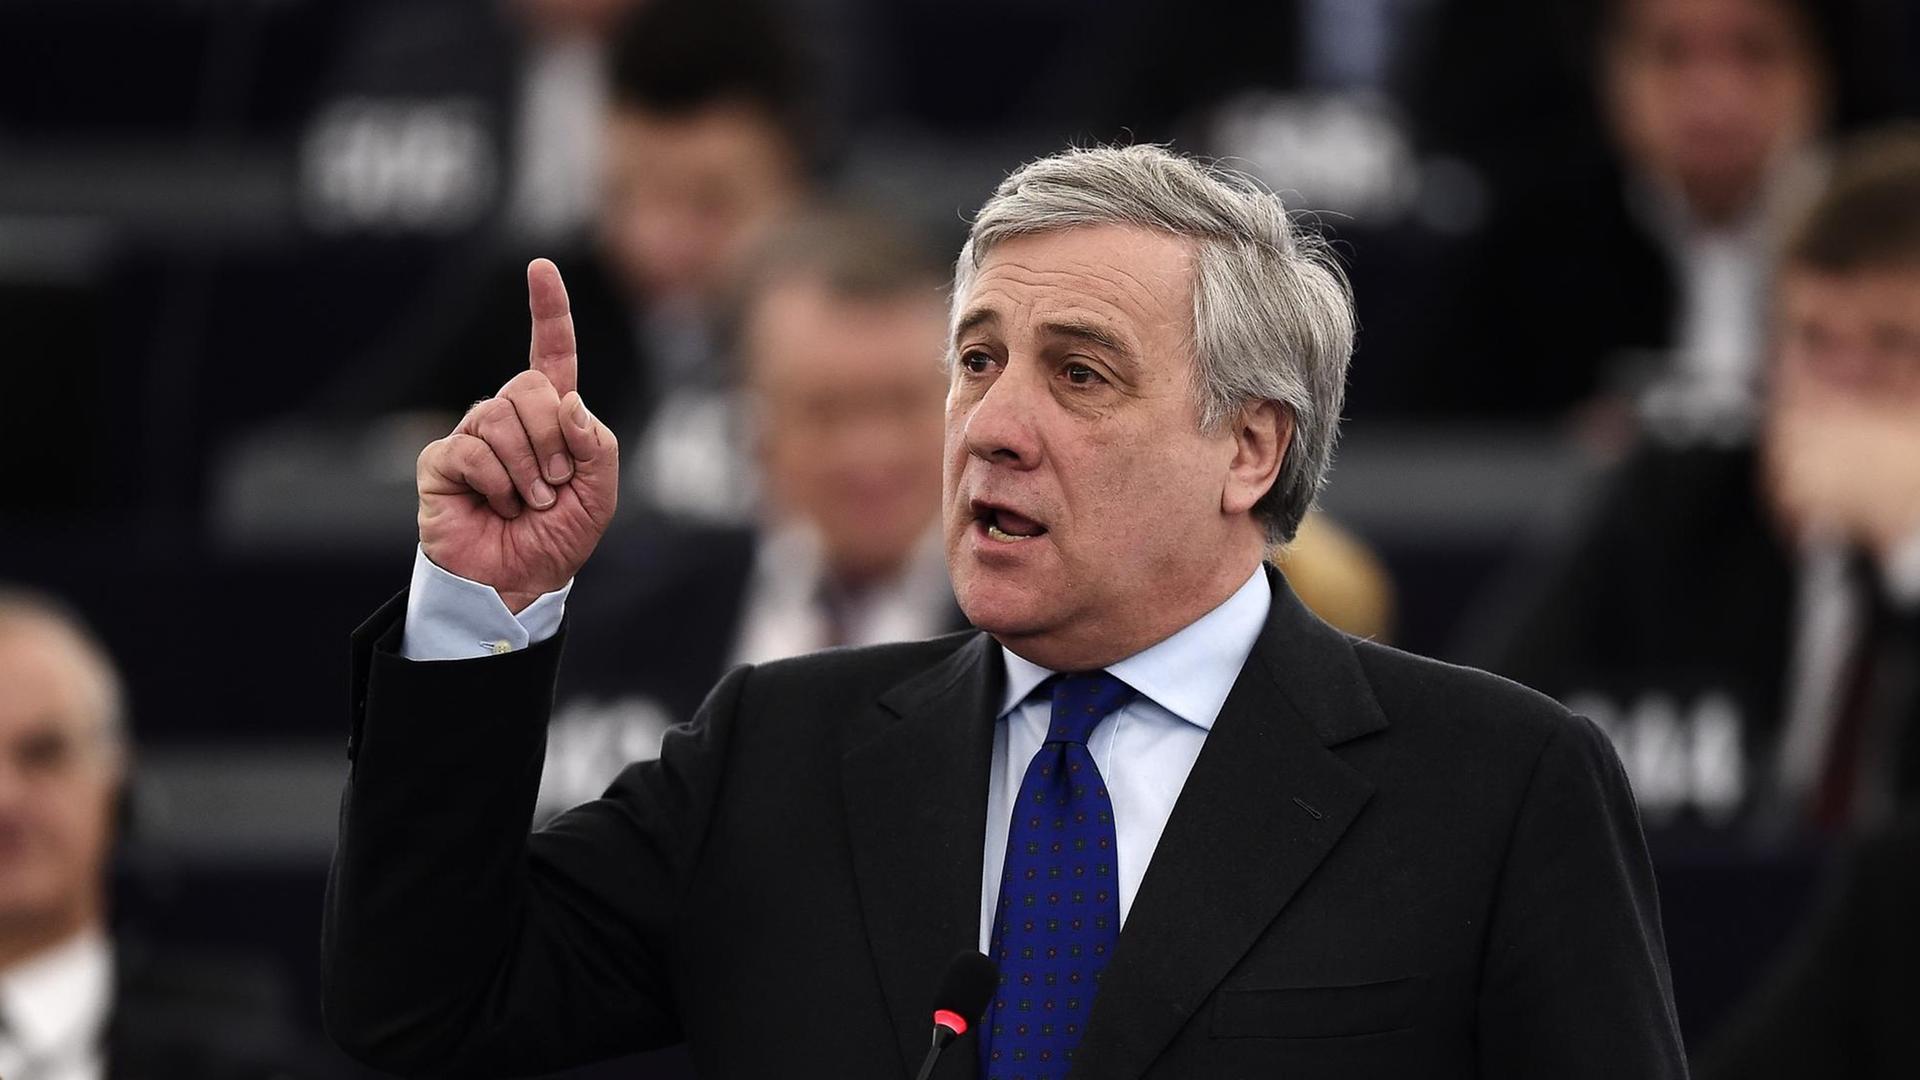 Antonio Tajani von der EVP-Fraktion im Europaparlament.